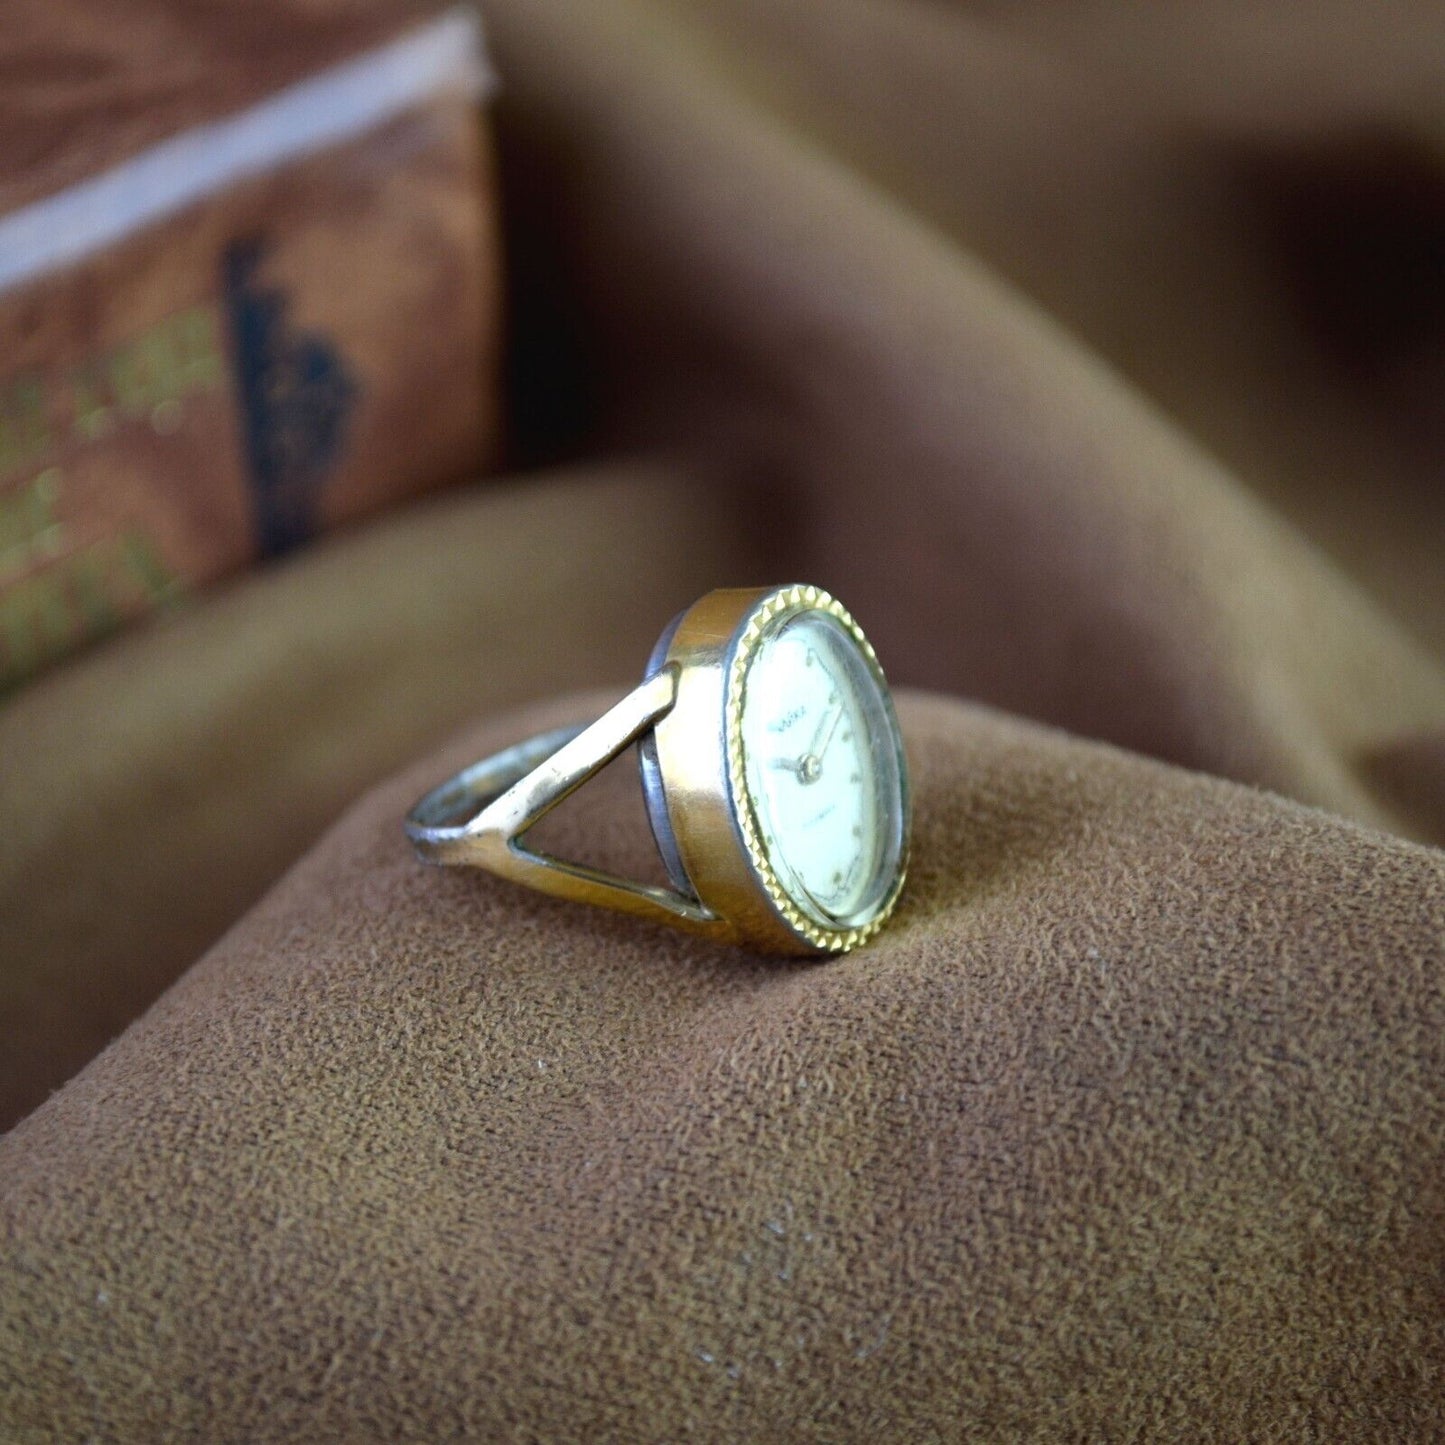 Soviet Womens Watch CHAIKA Vintage Gold Filled Ladies Mechanical Chaika Ring 8